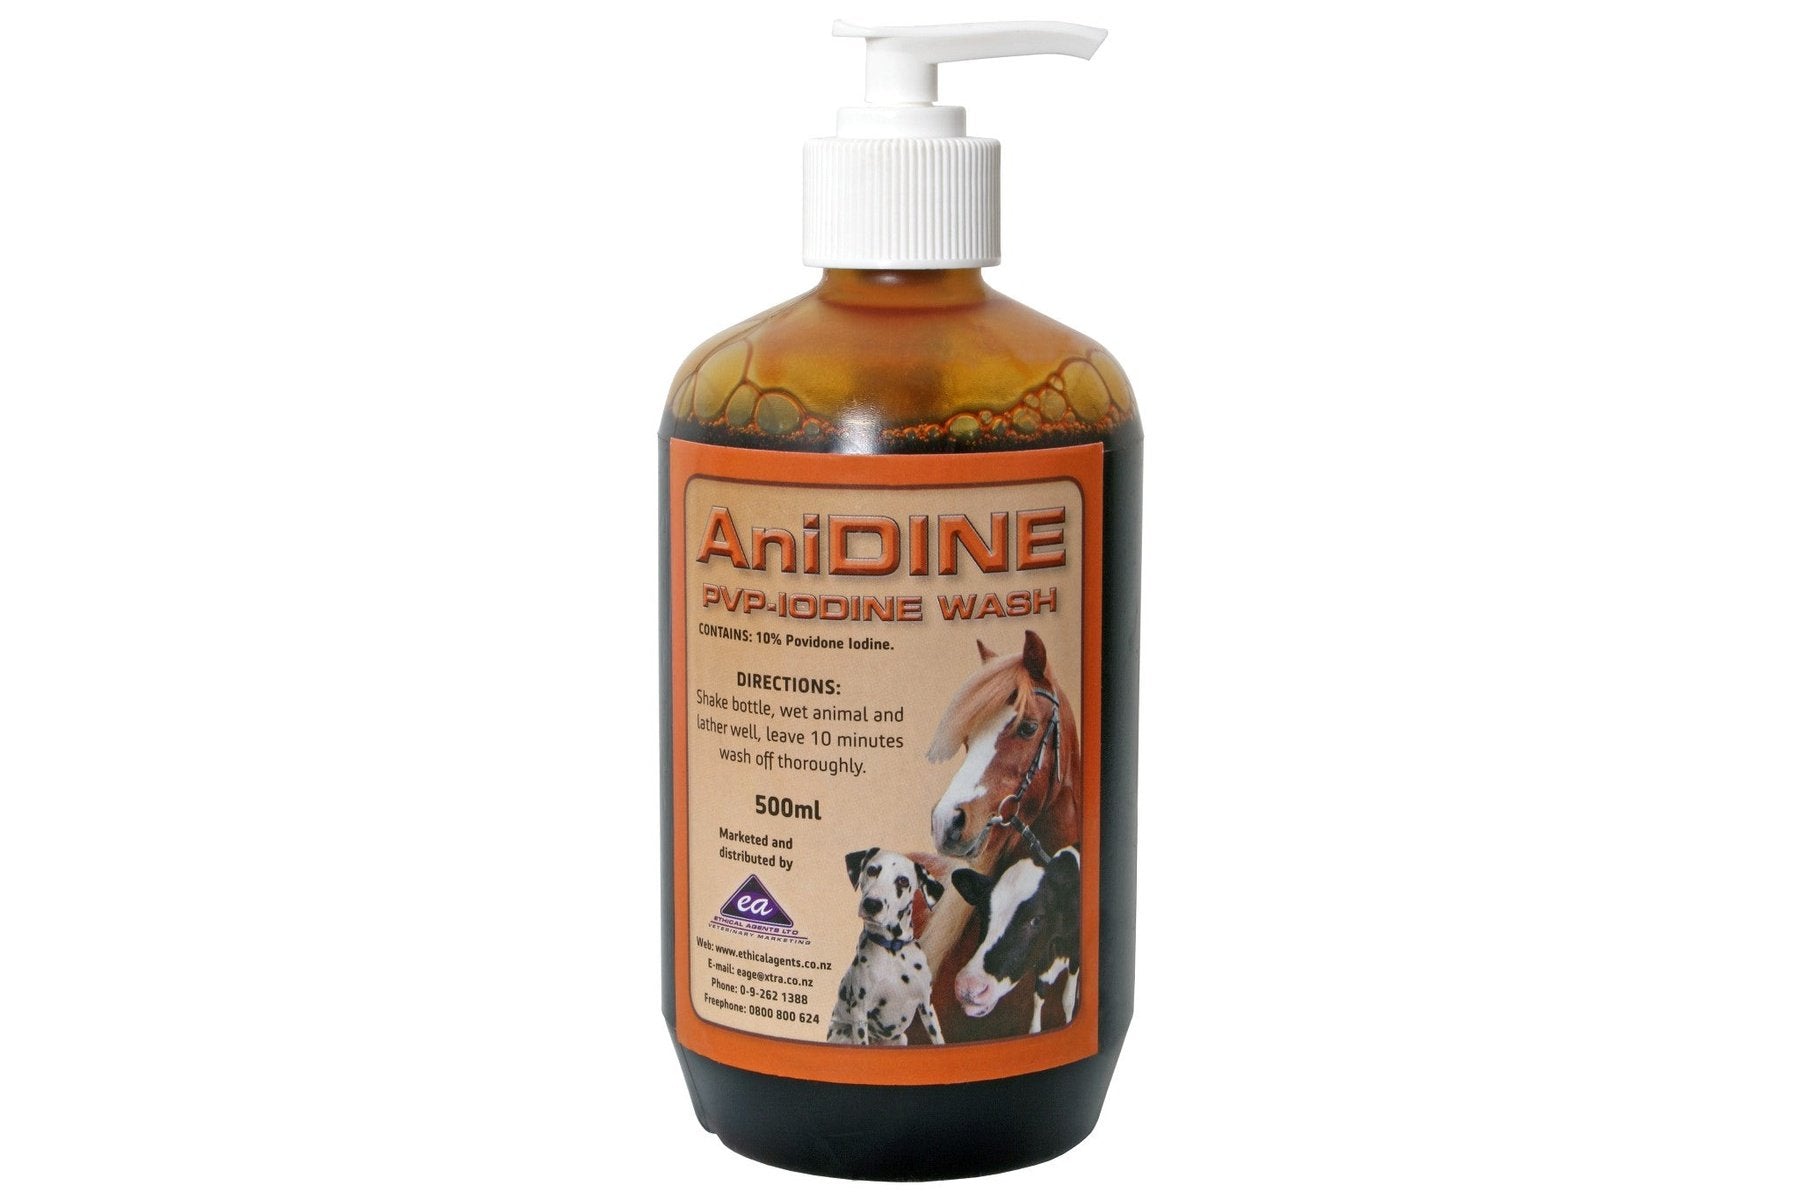 AniDINE PVP Iodine Wash